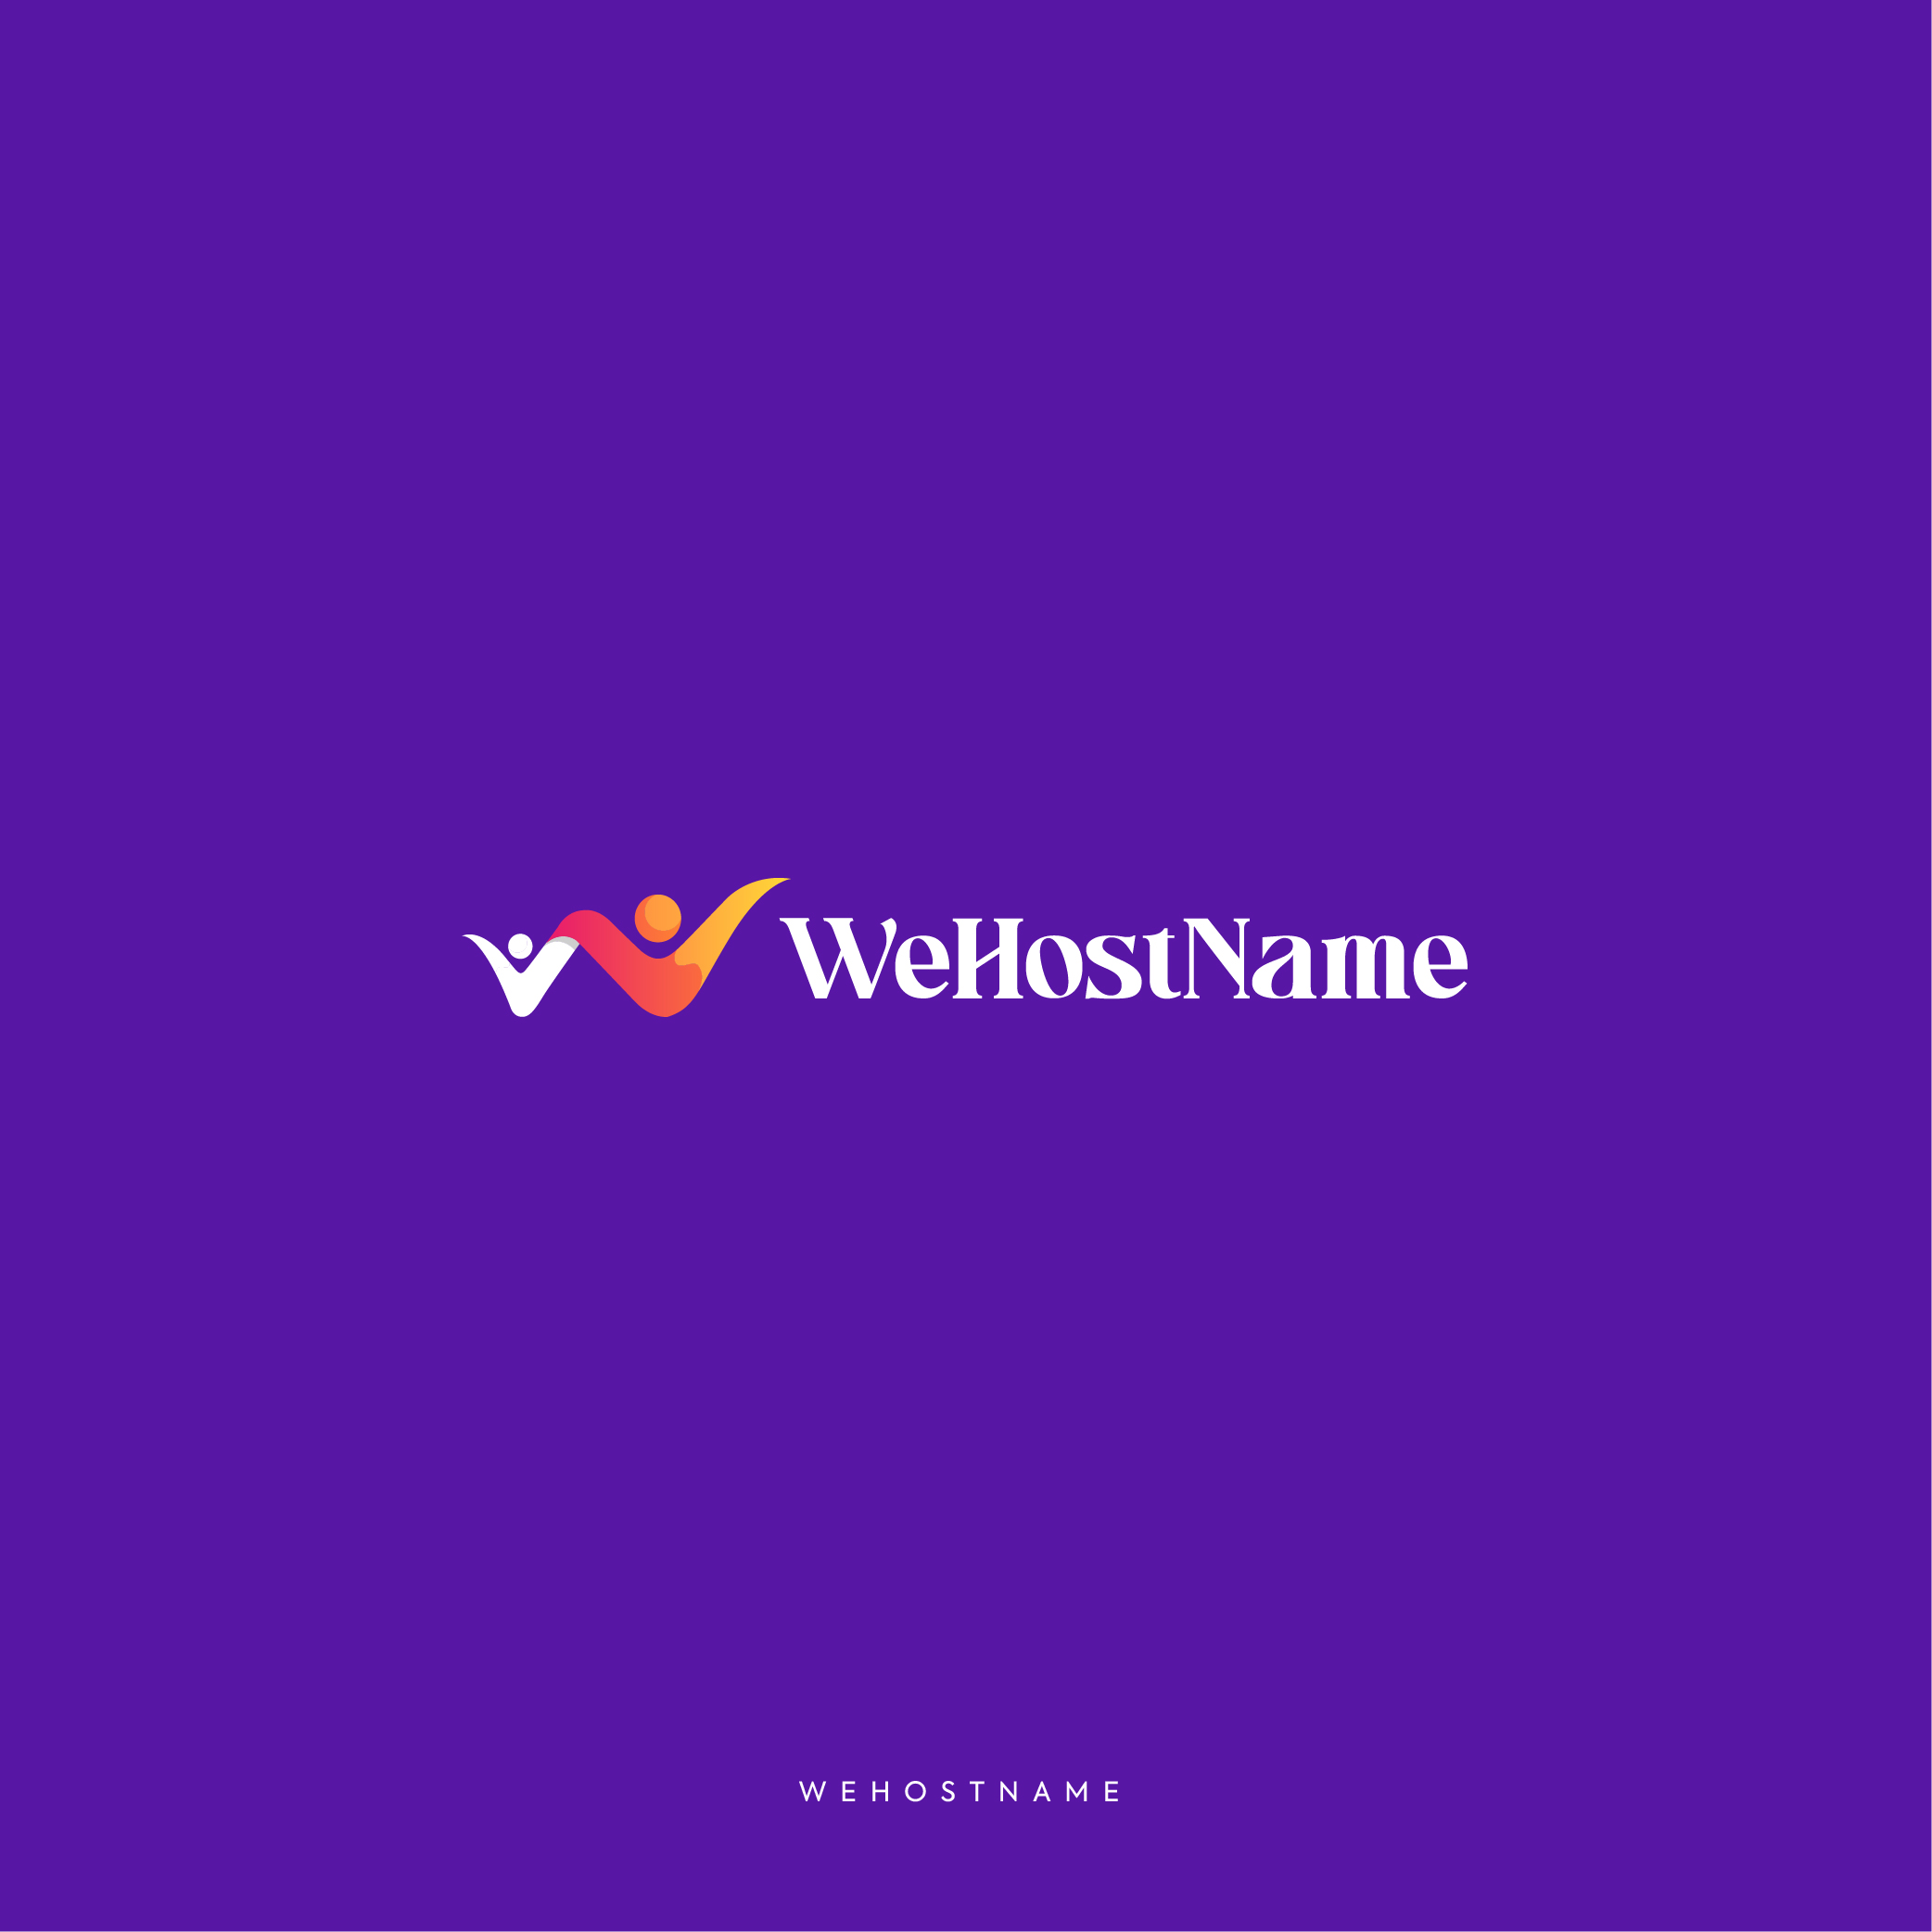 Wehostname Limited